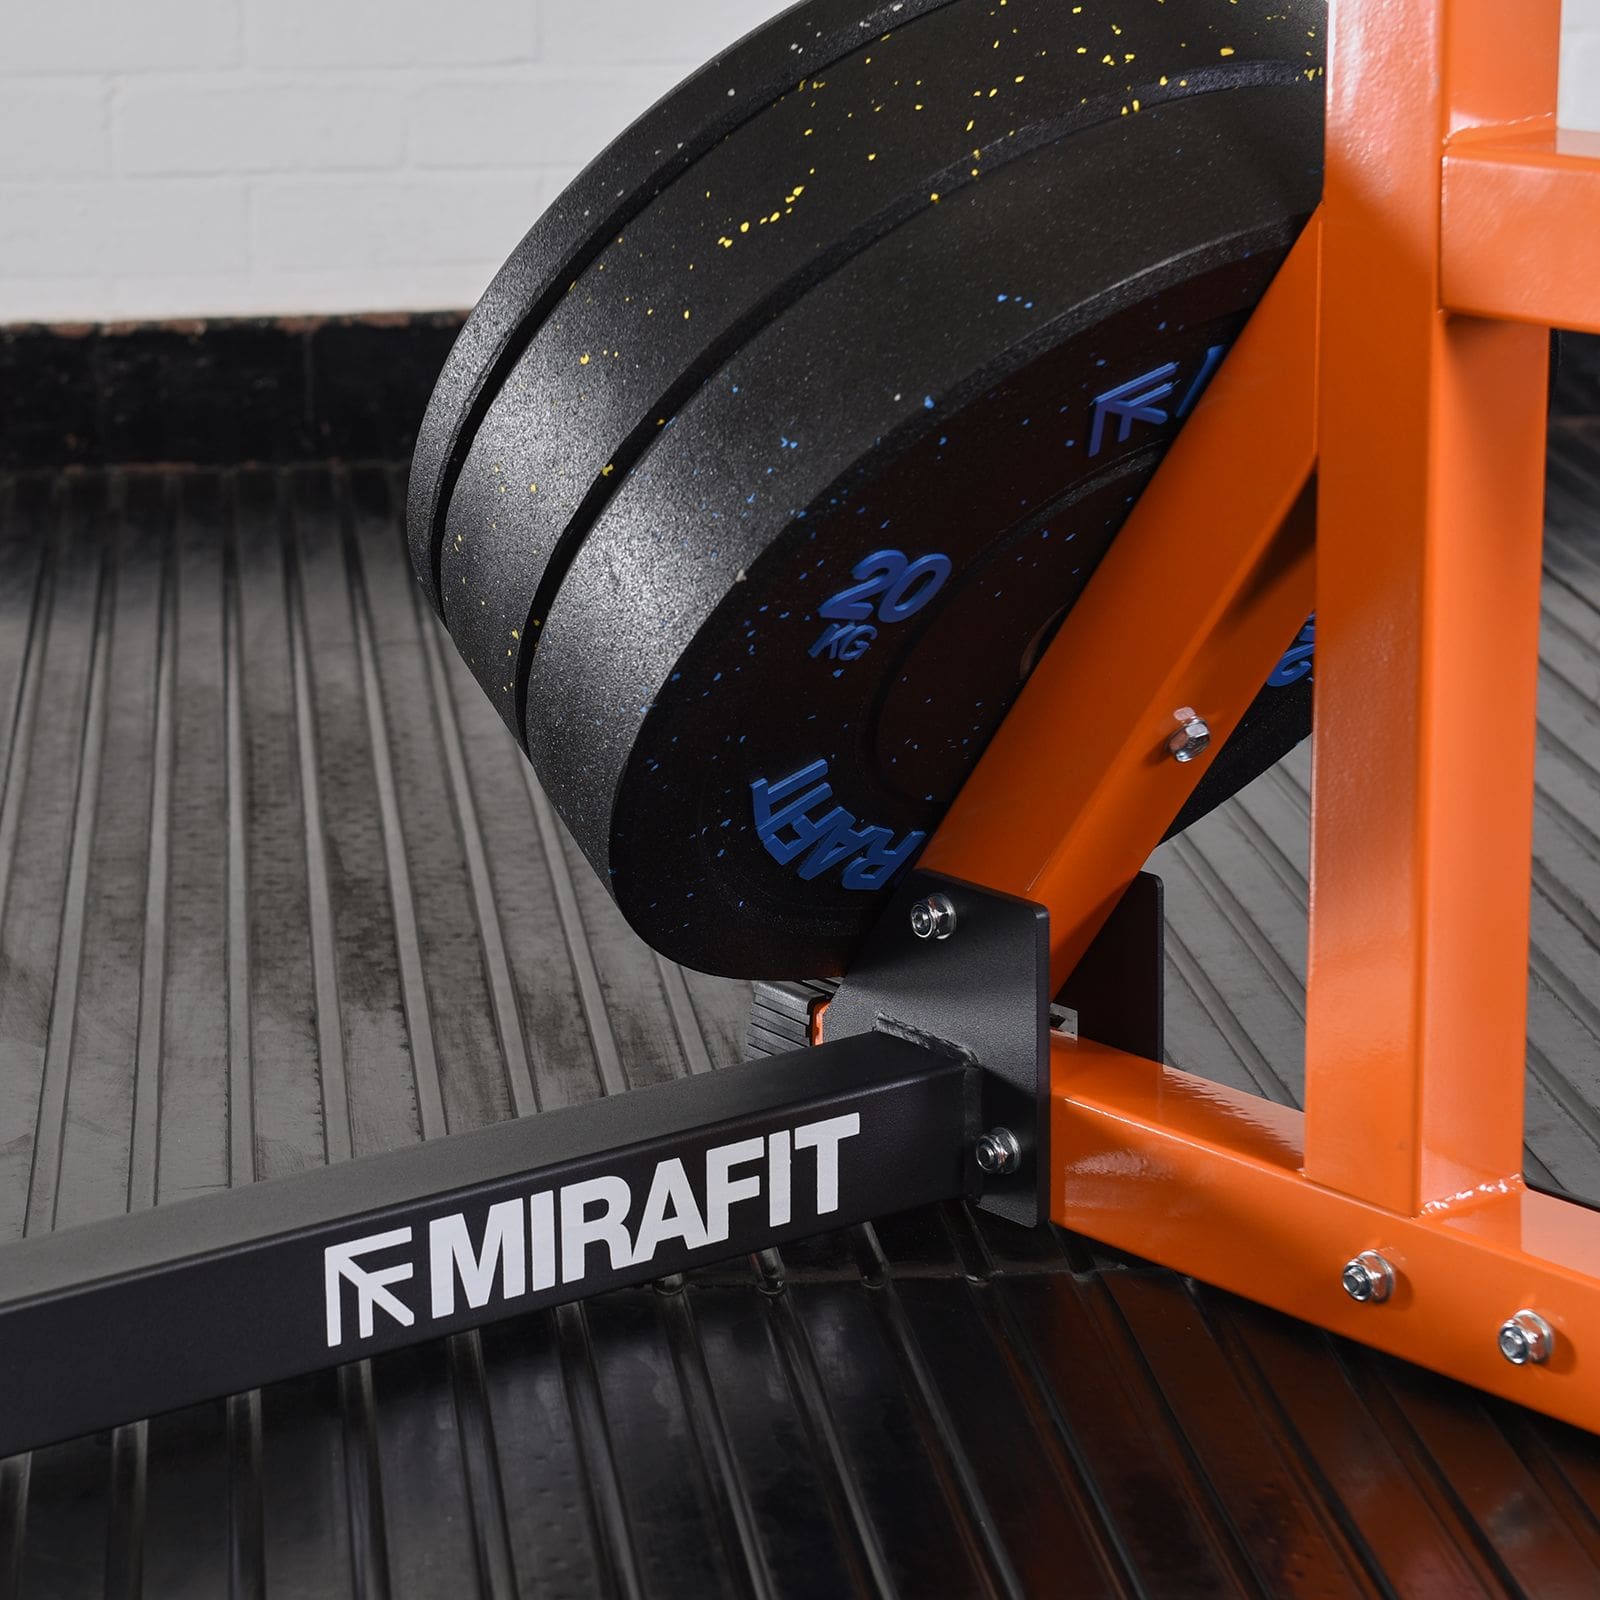 mirafit m2 squat rack - Review 2